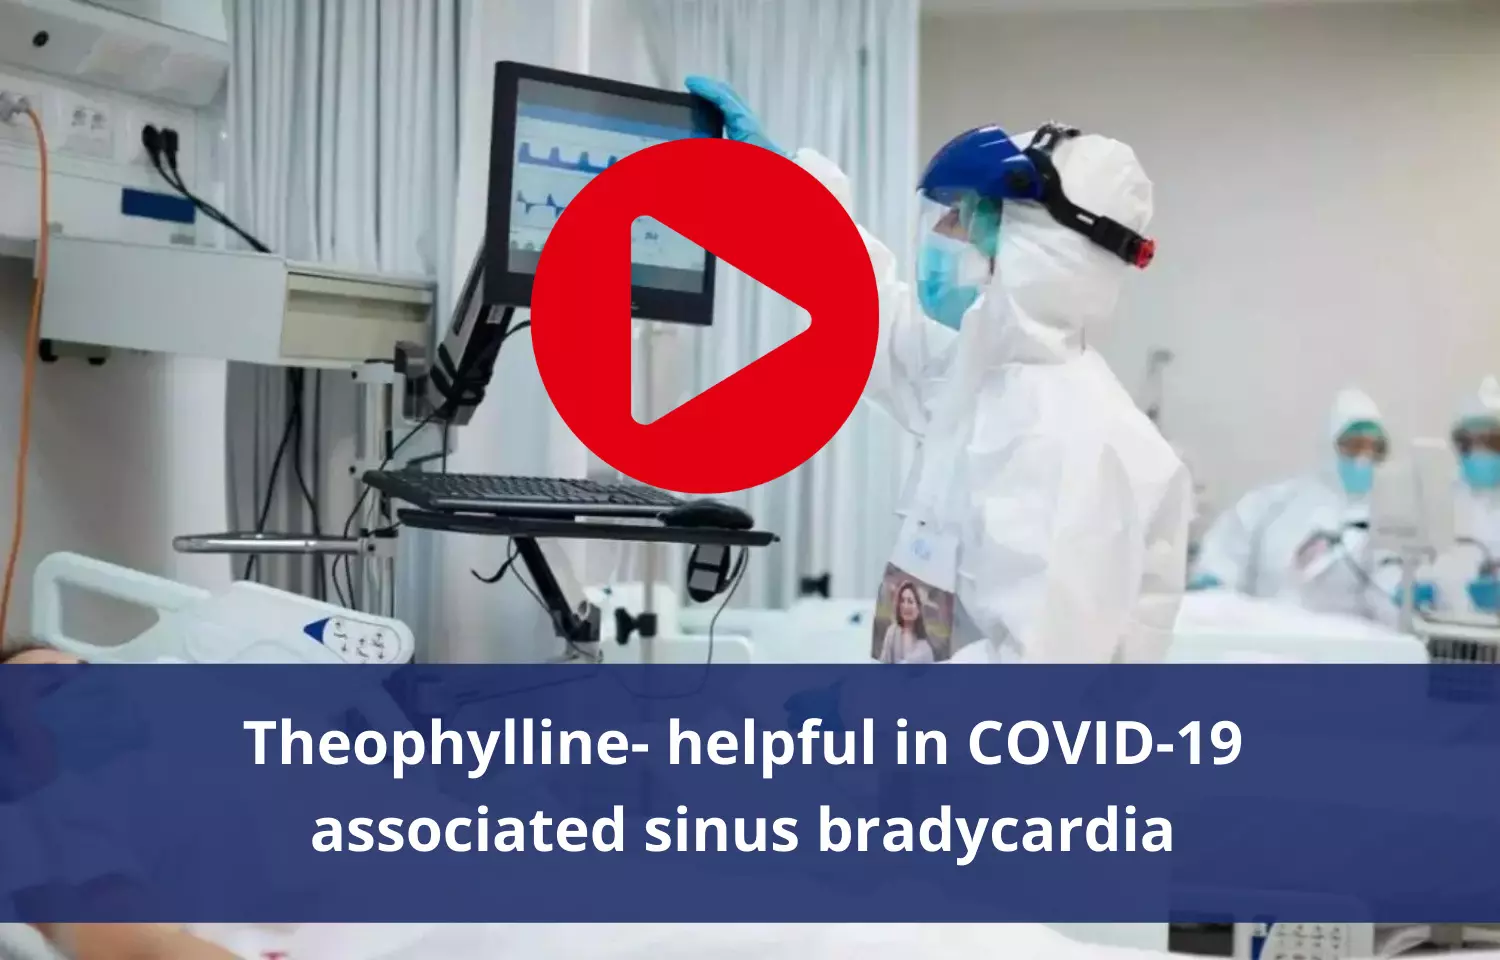 COVID 19 associated sinus bradycardia effectively treated by Theophylline